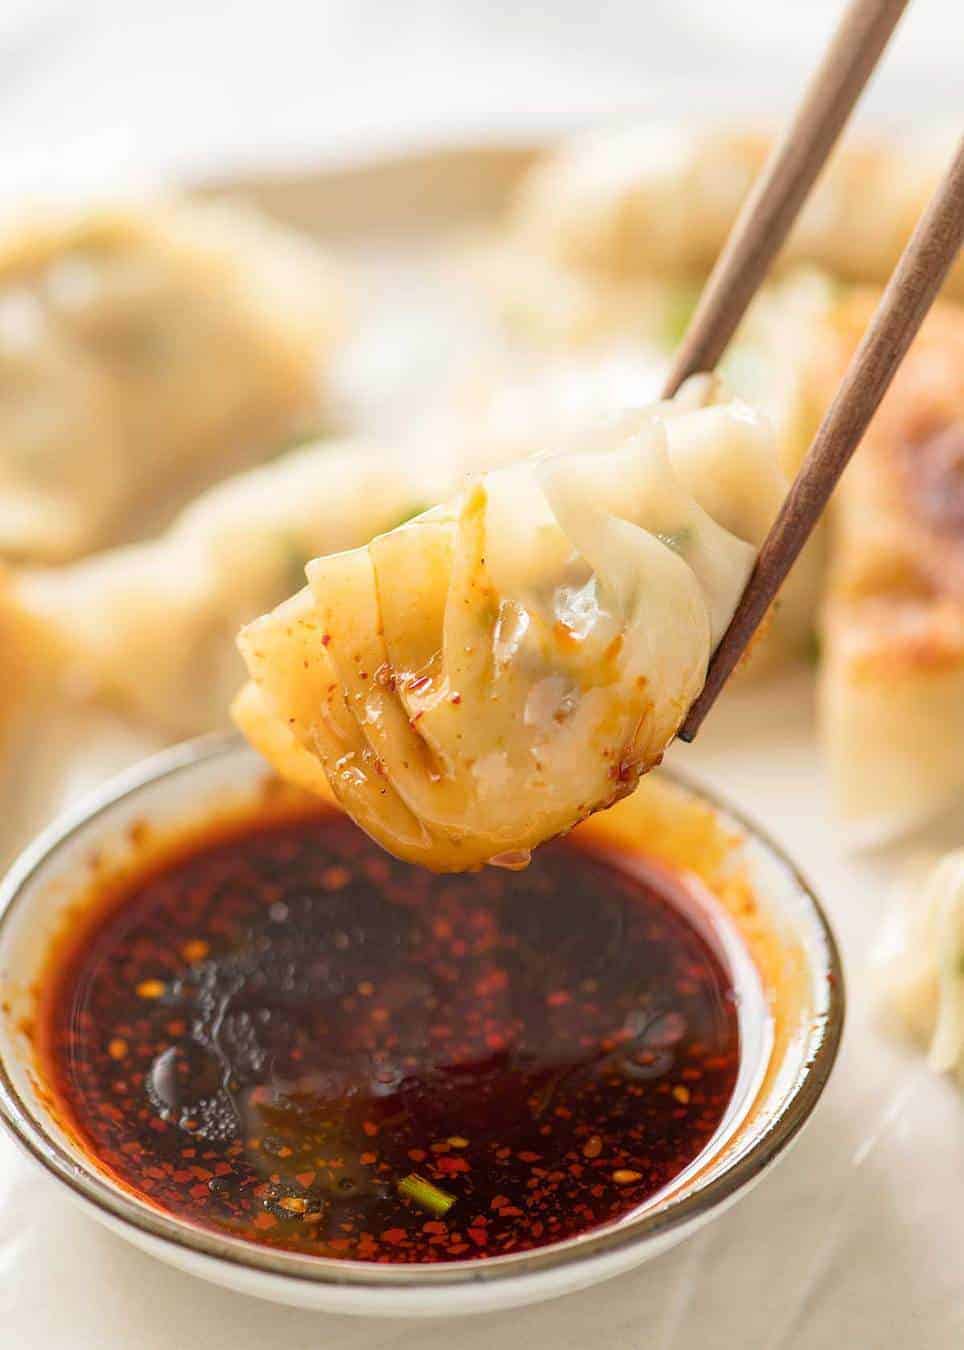 Potstickers Chinese Pan Fried Dumplings   RecipeTin Eats